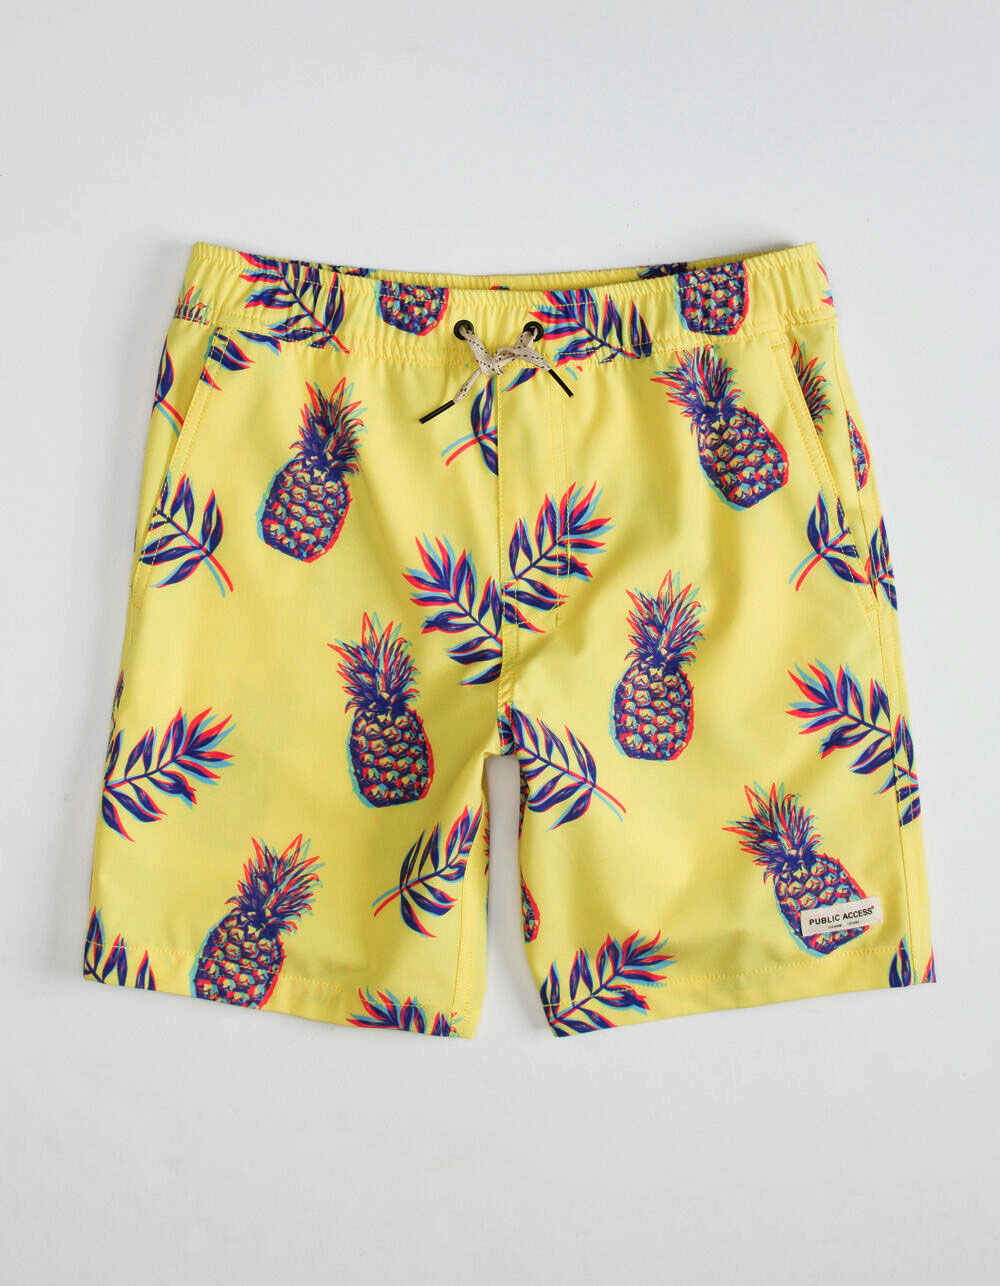 PUBLIC ACCESS Neon Pineapple Boys Elastic Waist Shorts image number 1